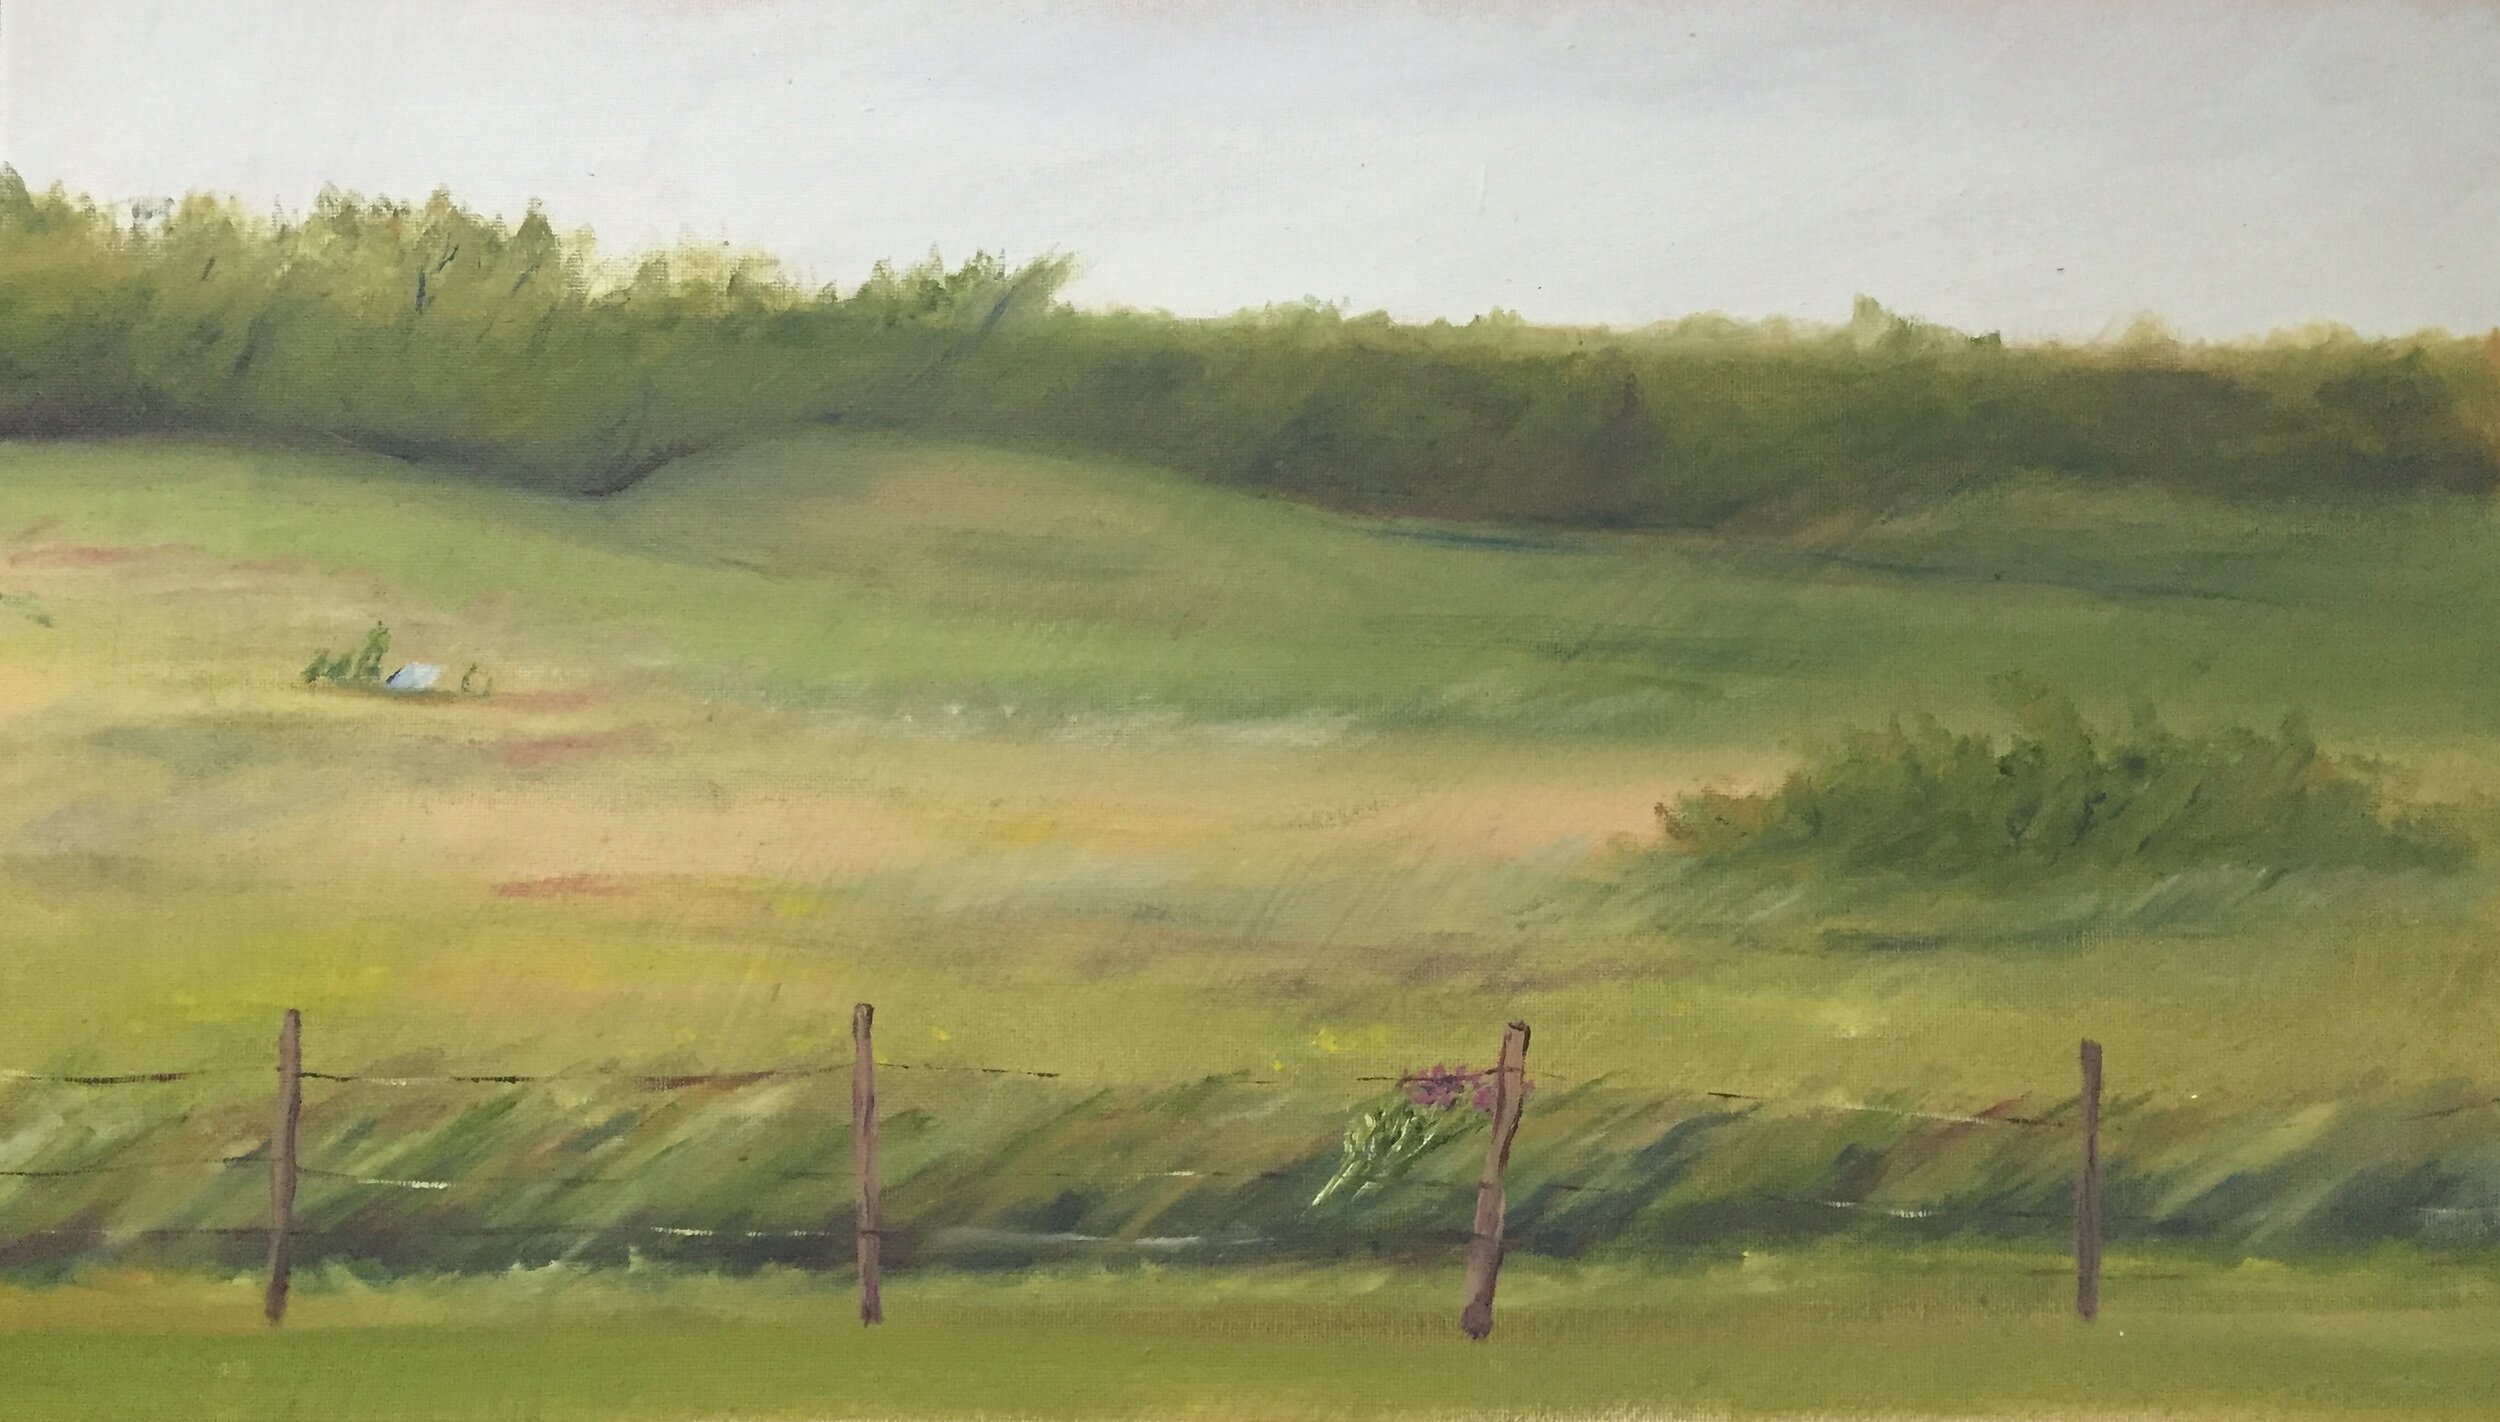   Untitled , Nebraska, 2021  Oil on Canvas, 11 x 20” 